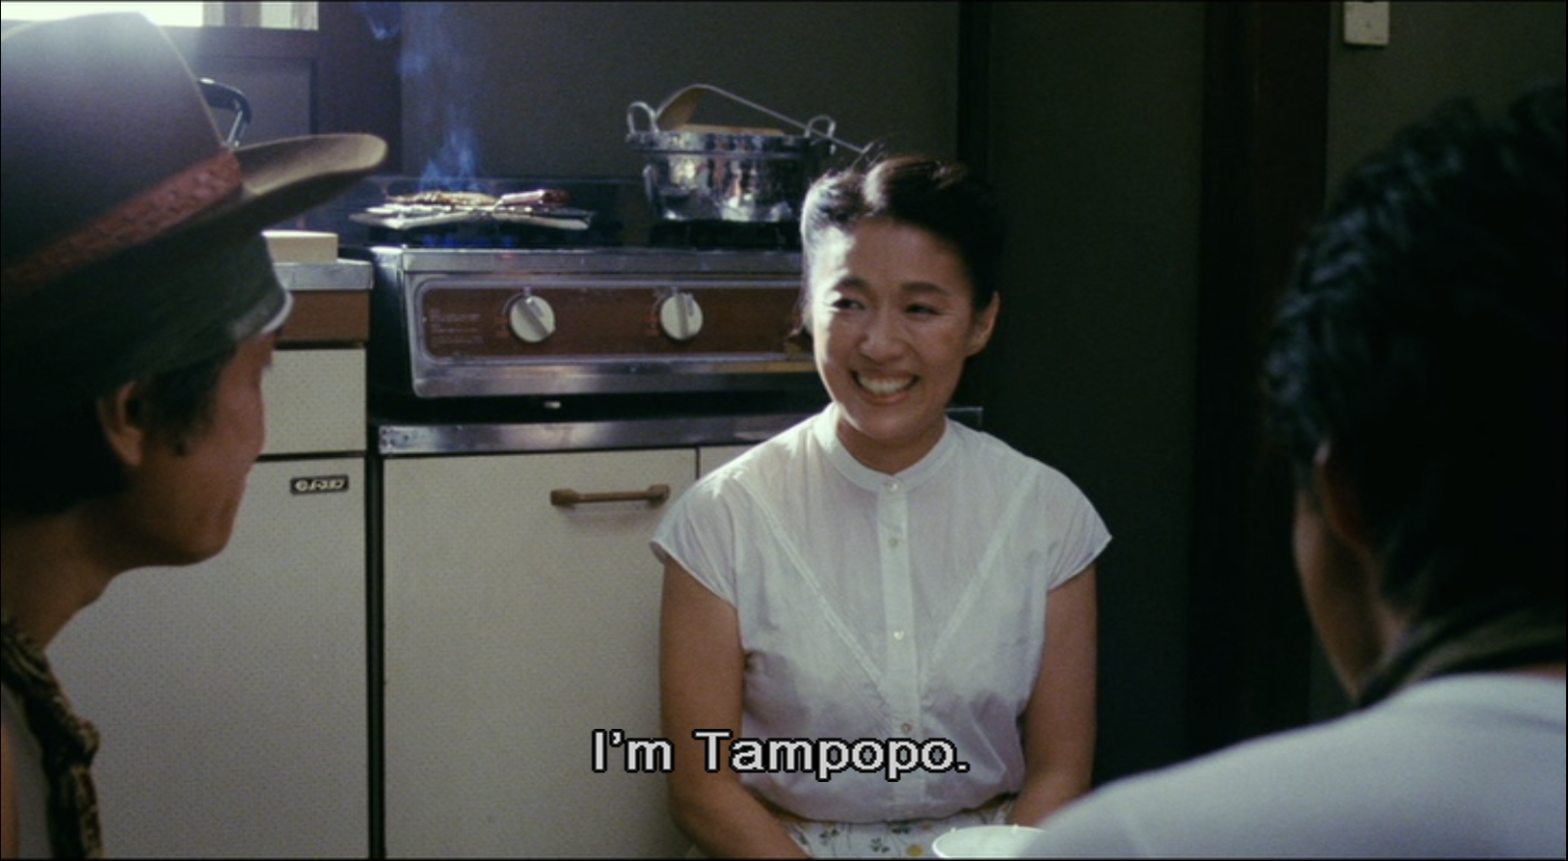 Tampopo (1985)